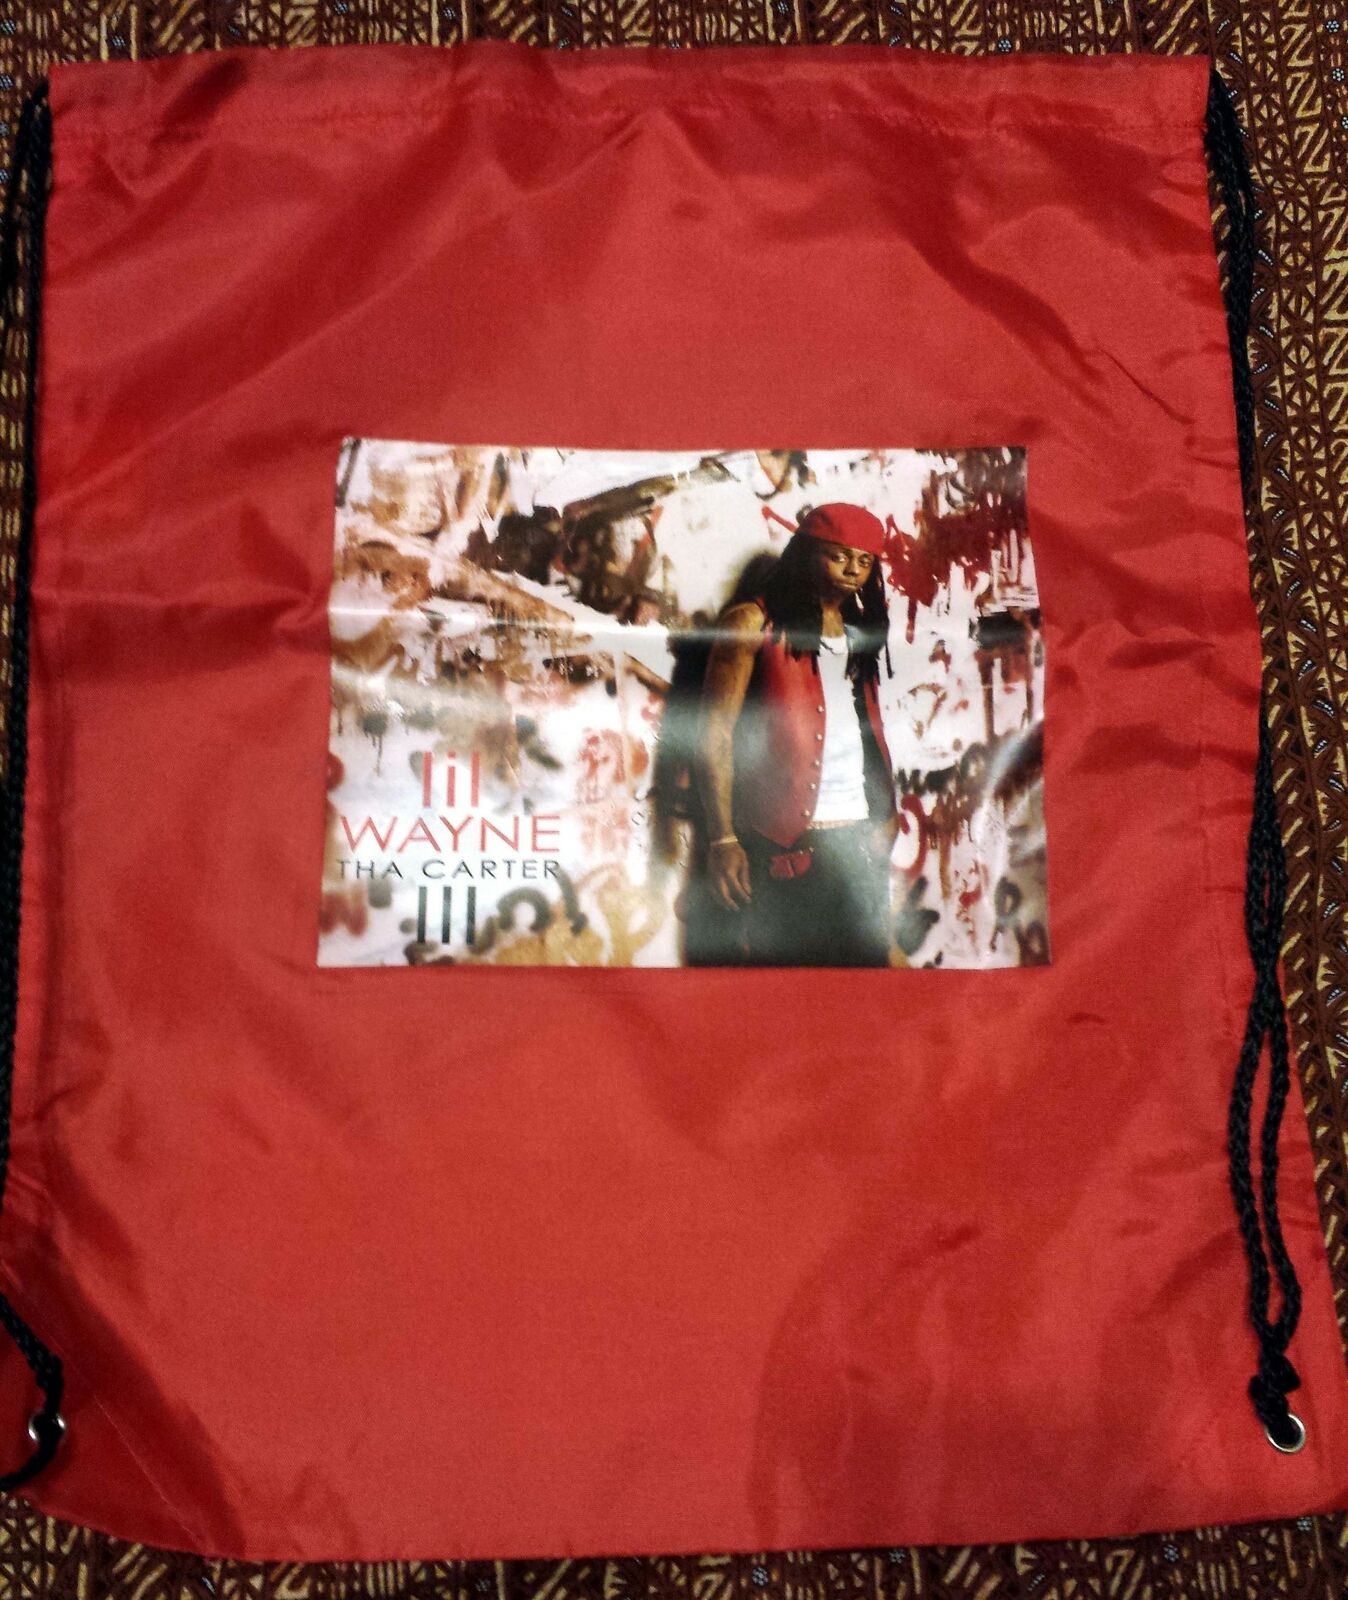 Sale item PROMO Book Bag Knapsack - LIL WAYNE Carter Nylon Product III Red Tha